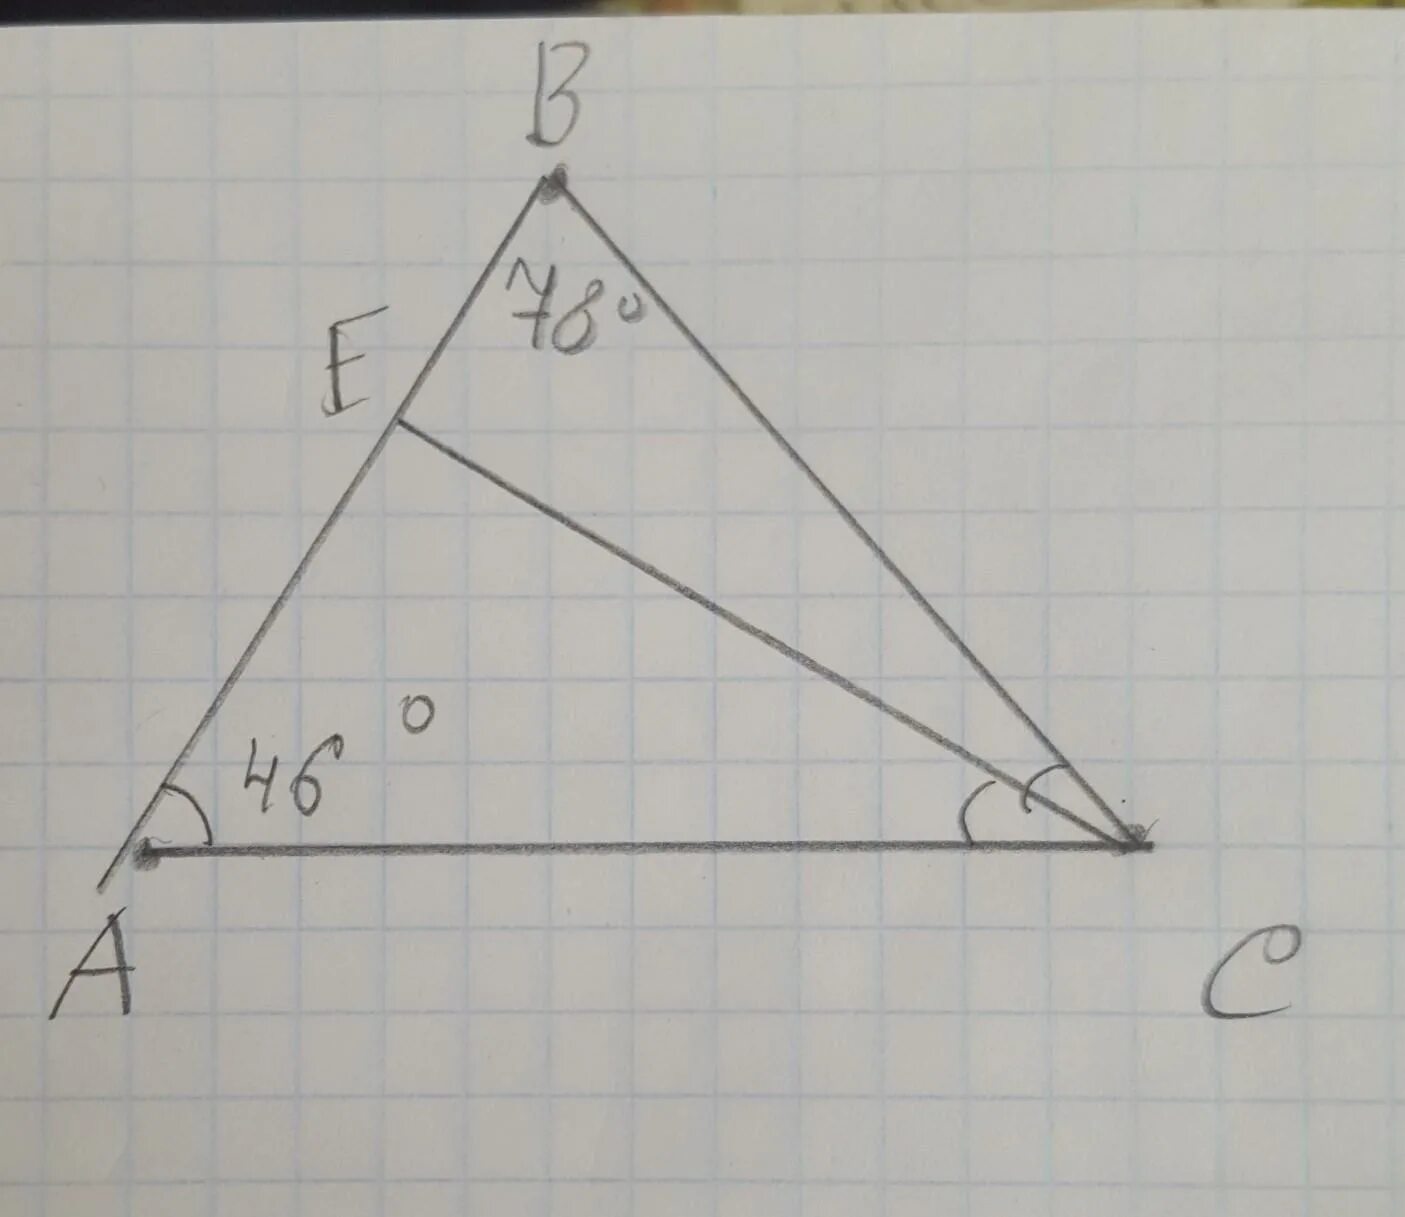 В прямоугольном треугольнике авс ае биссектриса. Провести биссектрису в треугольнике. Треугольник ABC. В треугольнике ABC проведена биссектриса. В треугольнике АВС проведена биссектриса се.